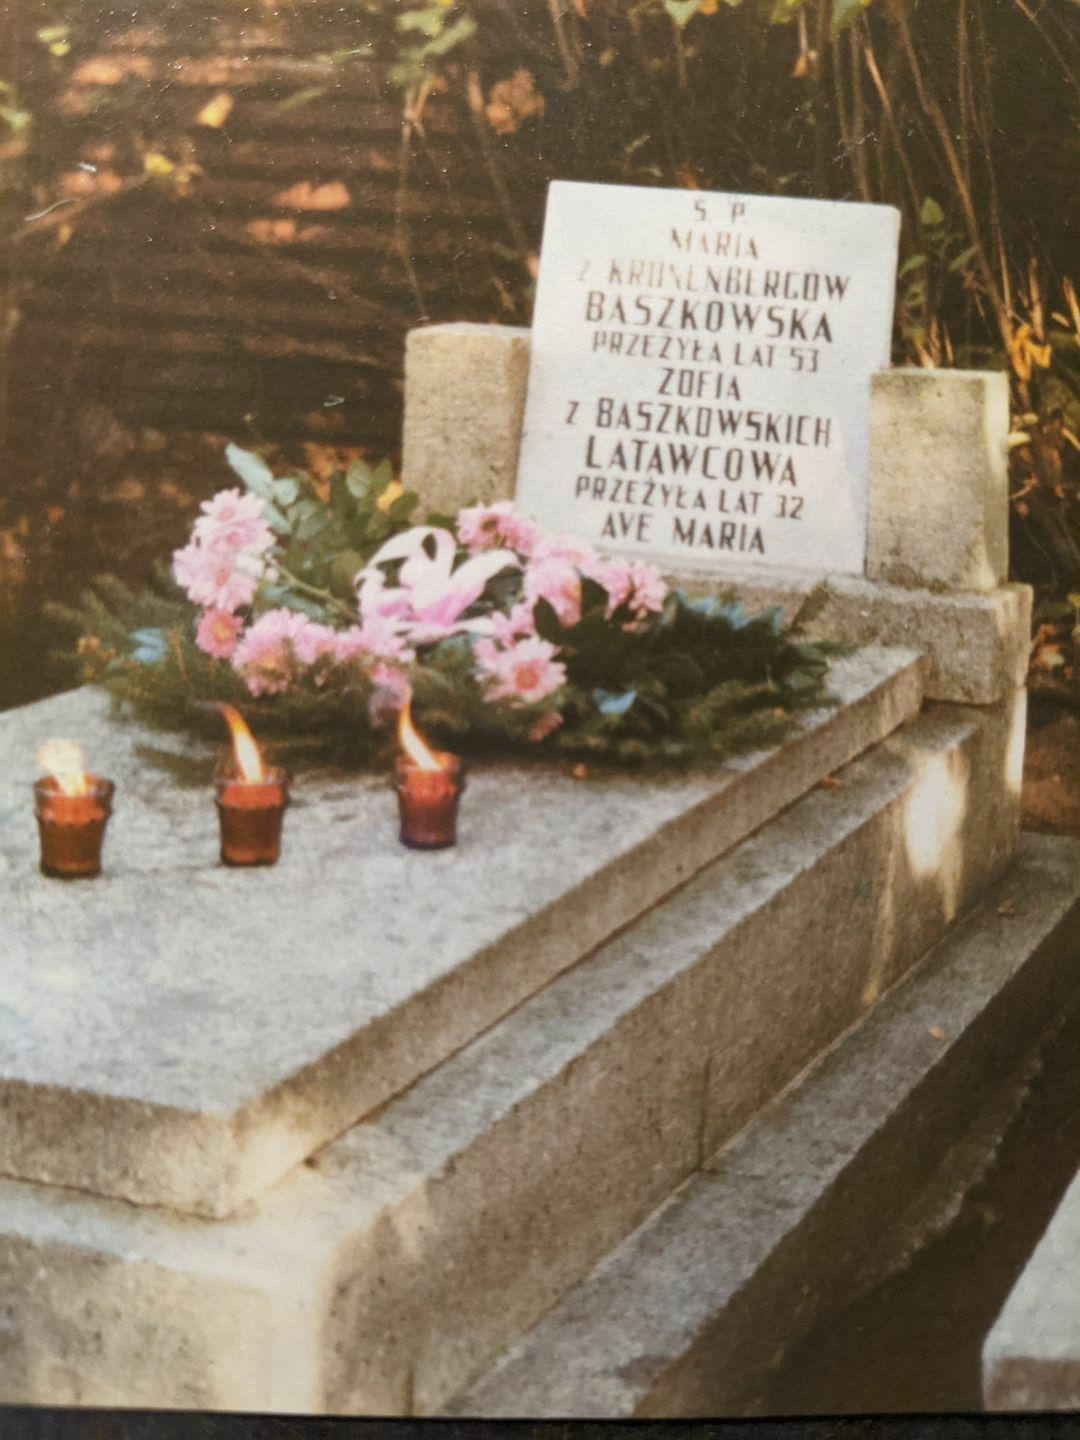 Maria Anna Baszkowska/Kronenberg Gravestone with daughter Zofia Baszkowska/Latawiec